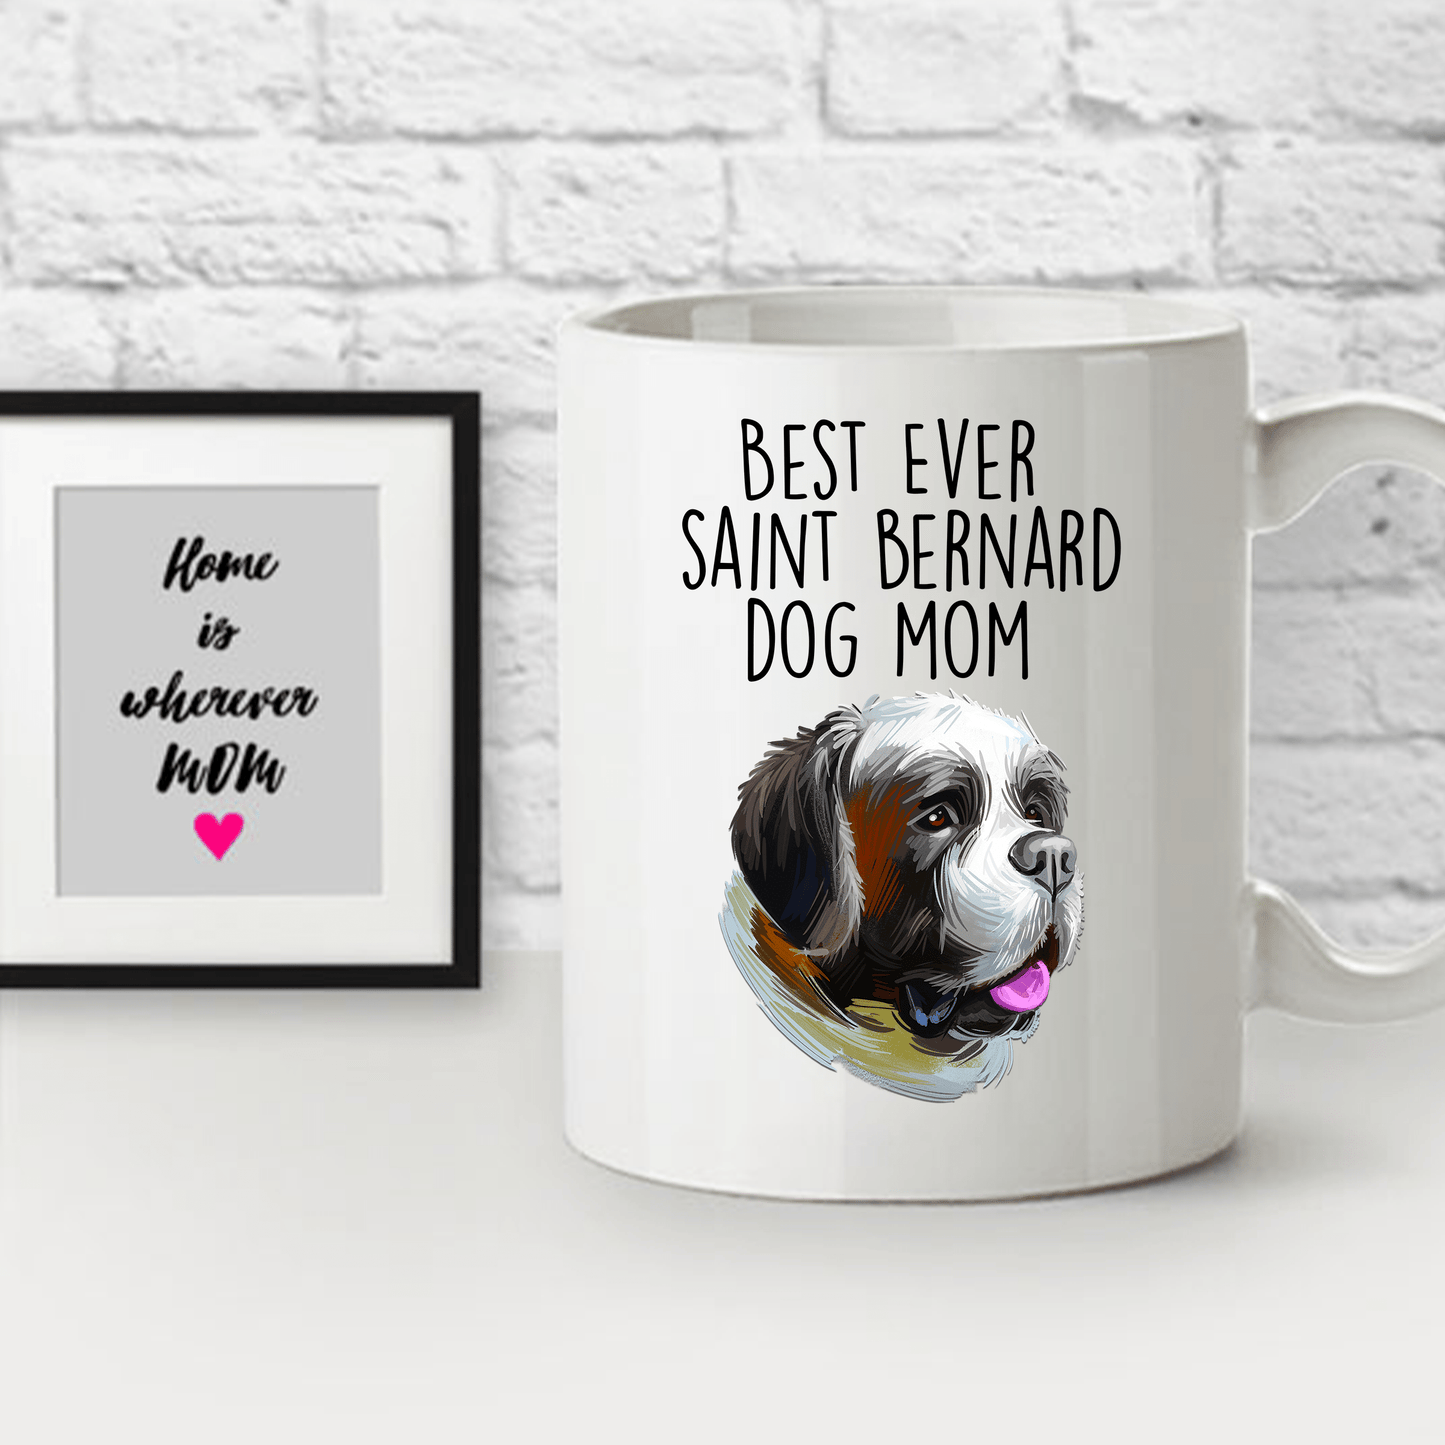 Saint Bernard Best Ever Dog Mom Ceramic Coffee Mug